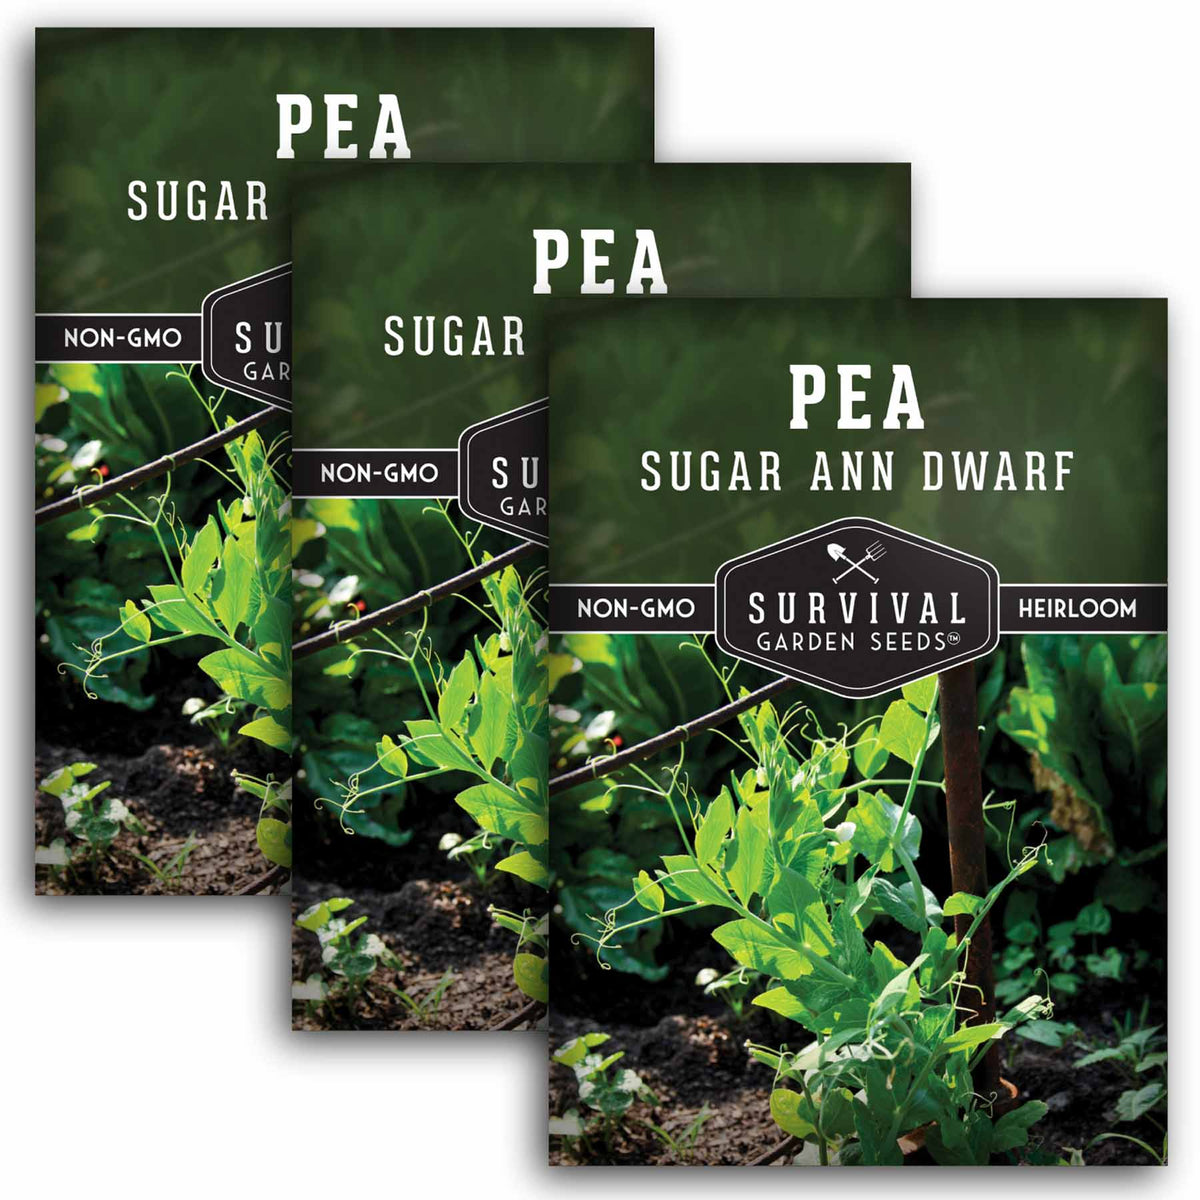 3 packet of Sugar Ann Dwarf Pea seeds